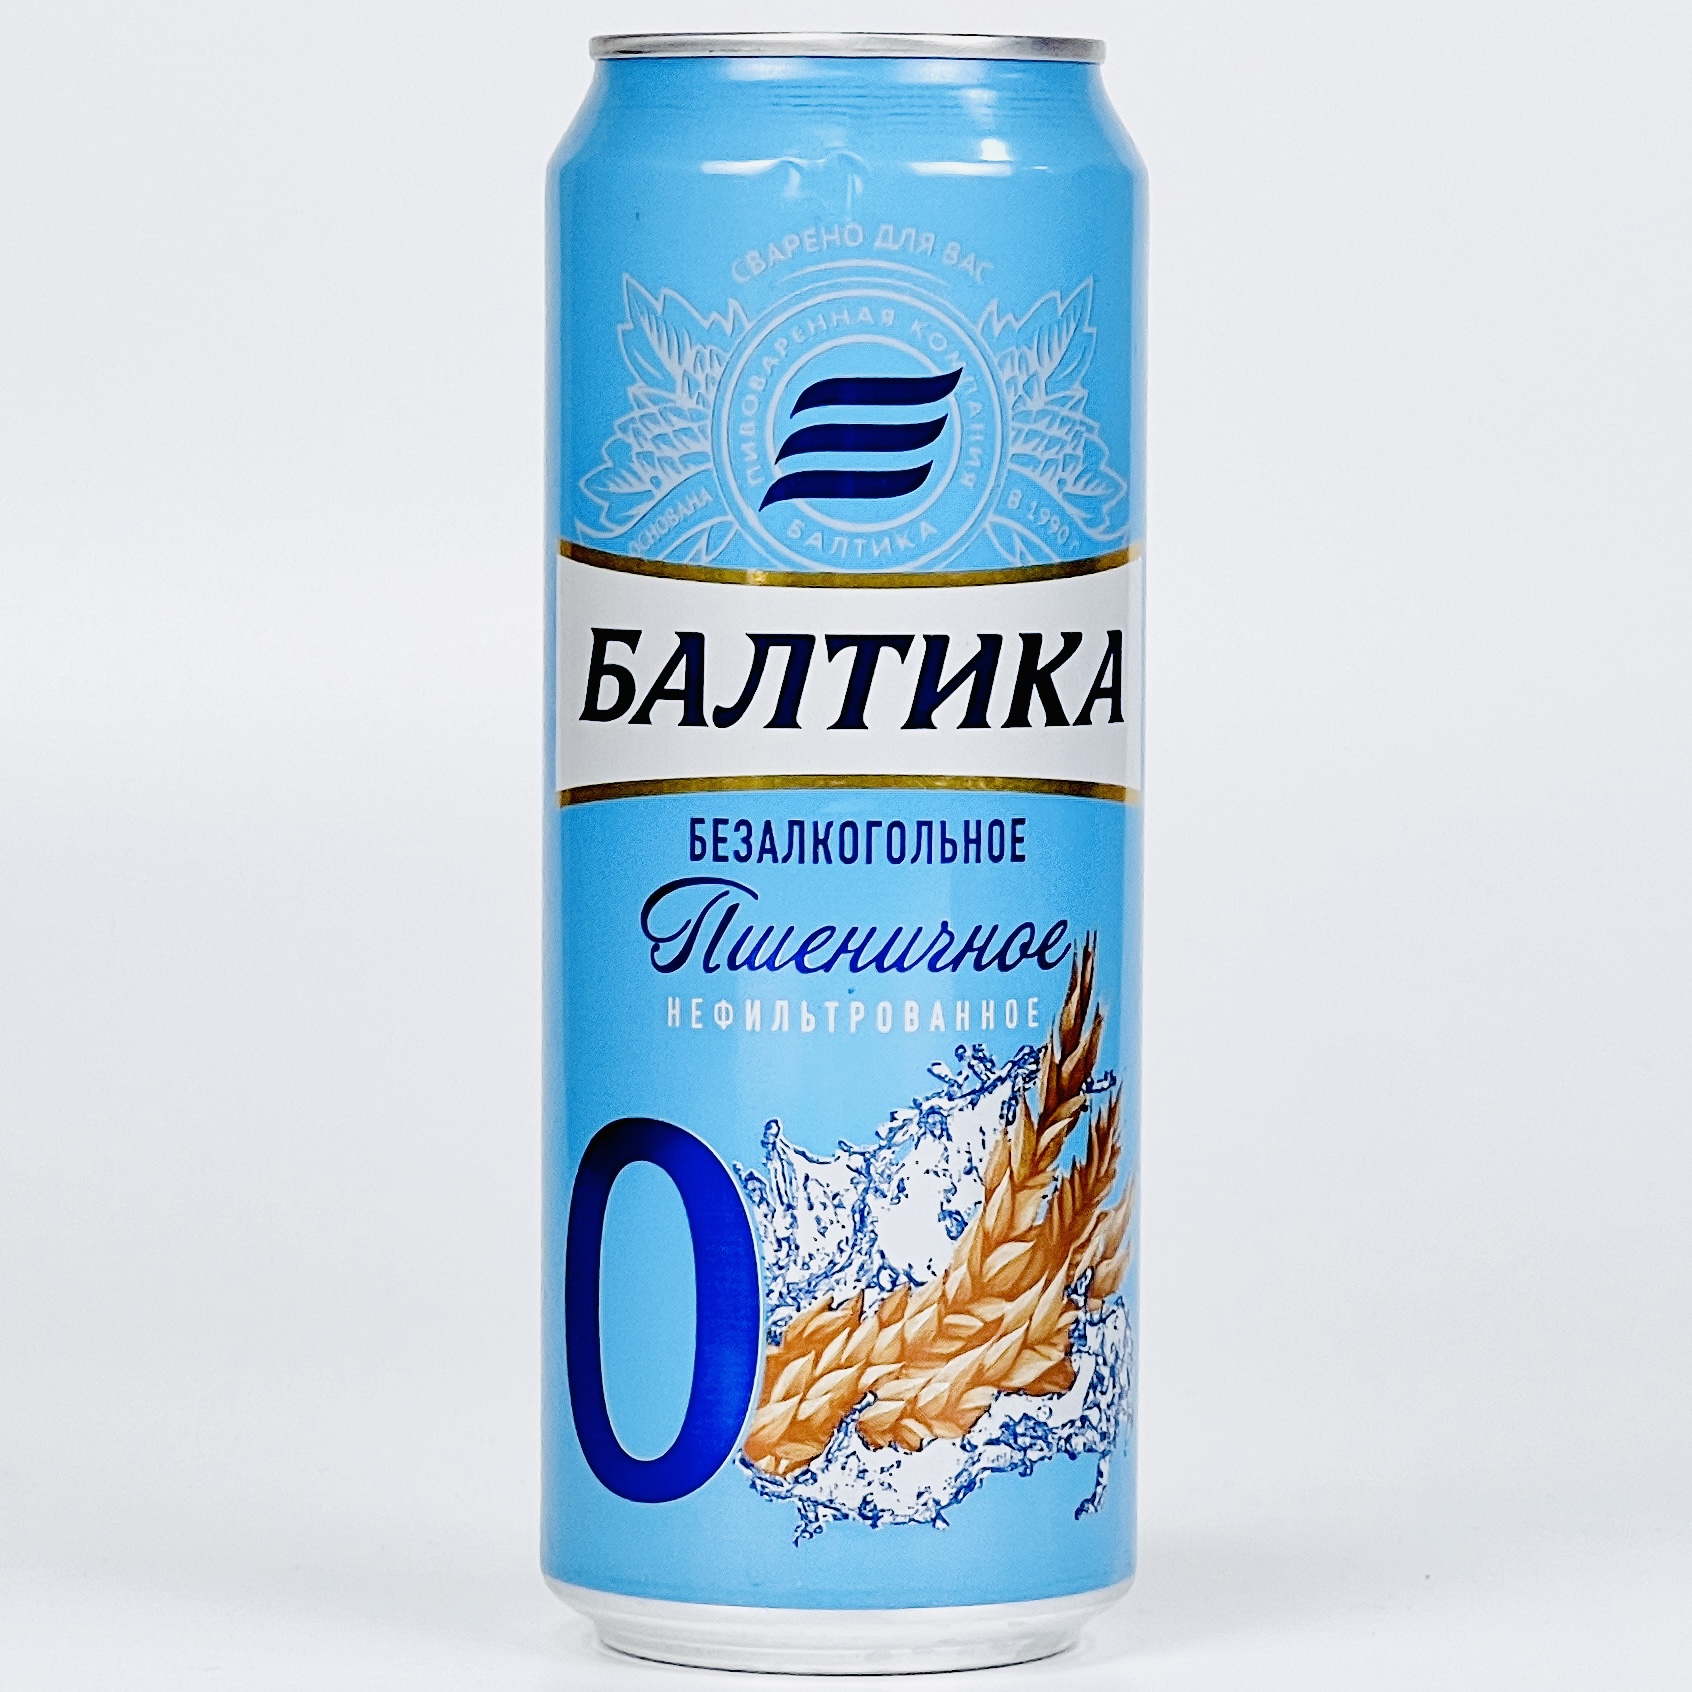 Балтика безалкогольное. Балтика пшеничное нефильтрованное. Балтика пшеничное безалкогольное. Балтика пшеничное нефильтрованное безалкогольное. Балтика 0 пшеничное нефильтрованное.